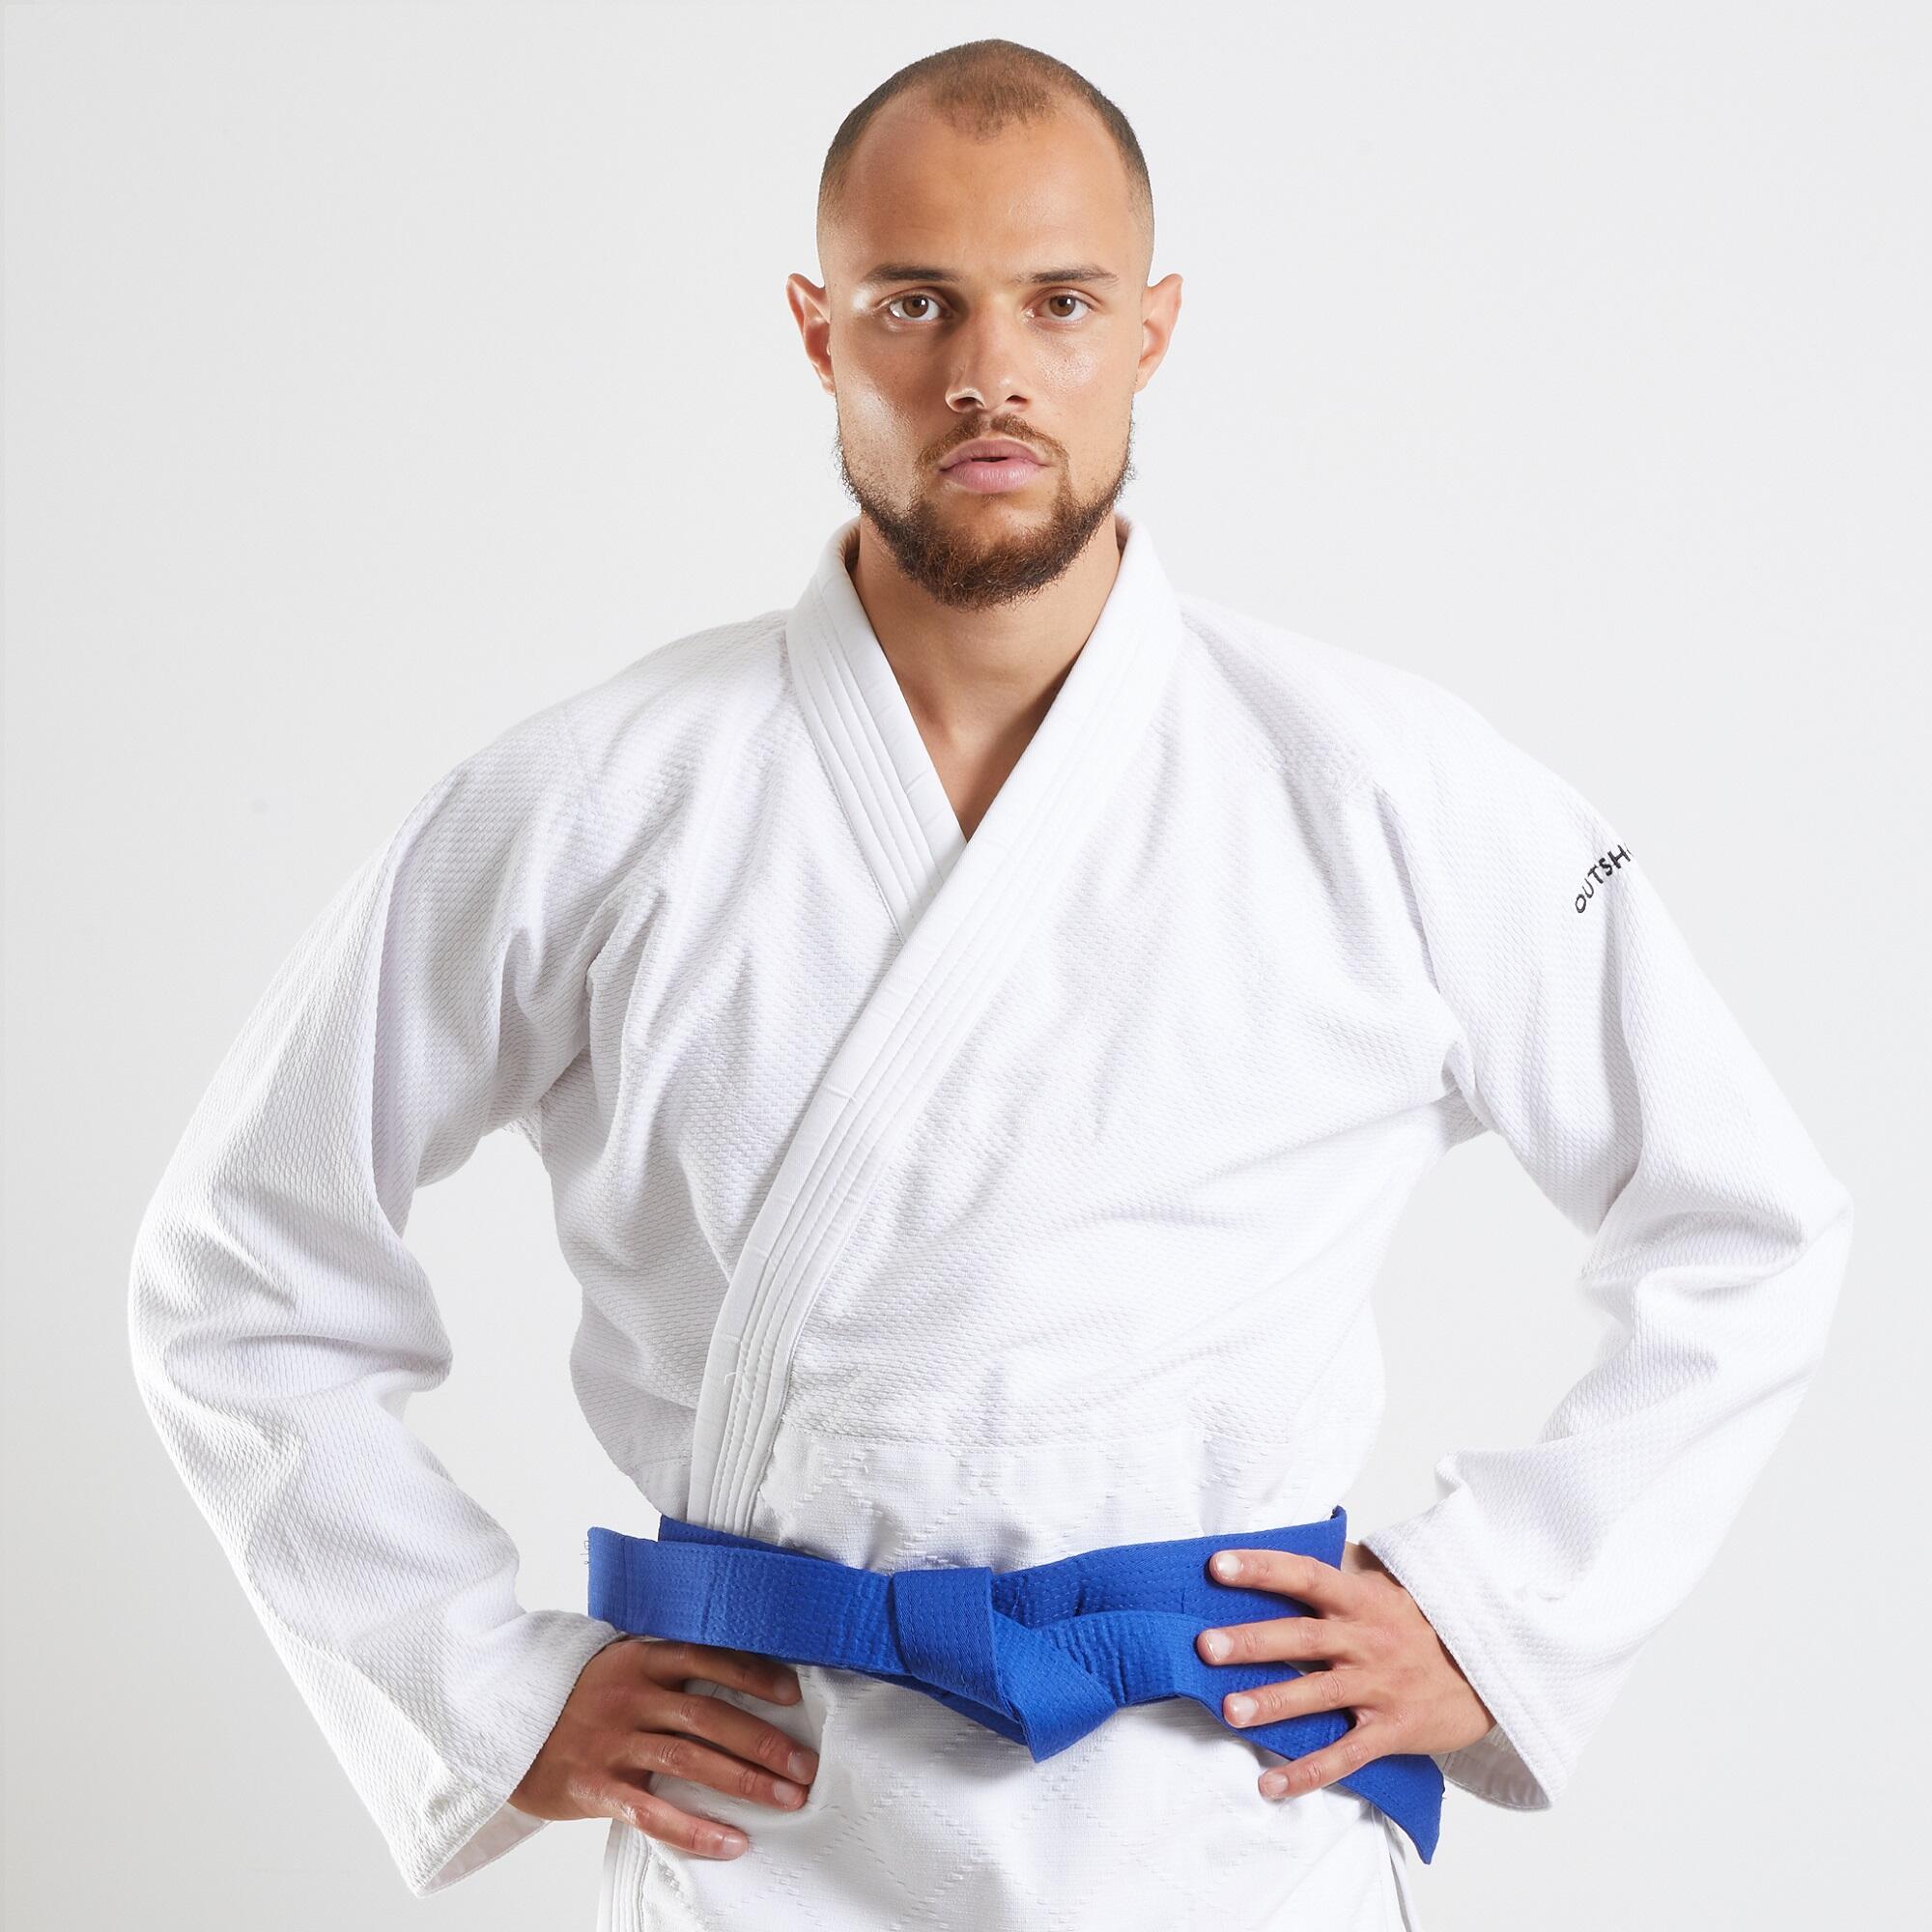 Judo Gis  IJF Approved Suit  Adidas Uniform  Budo Online